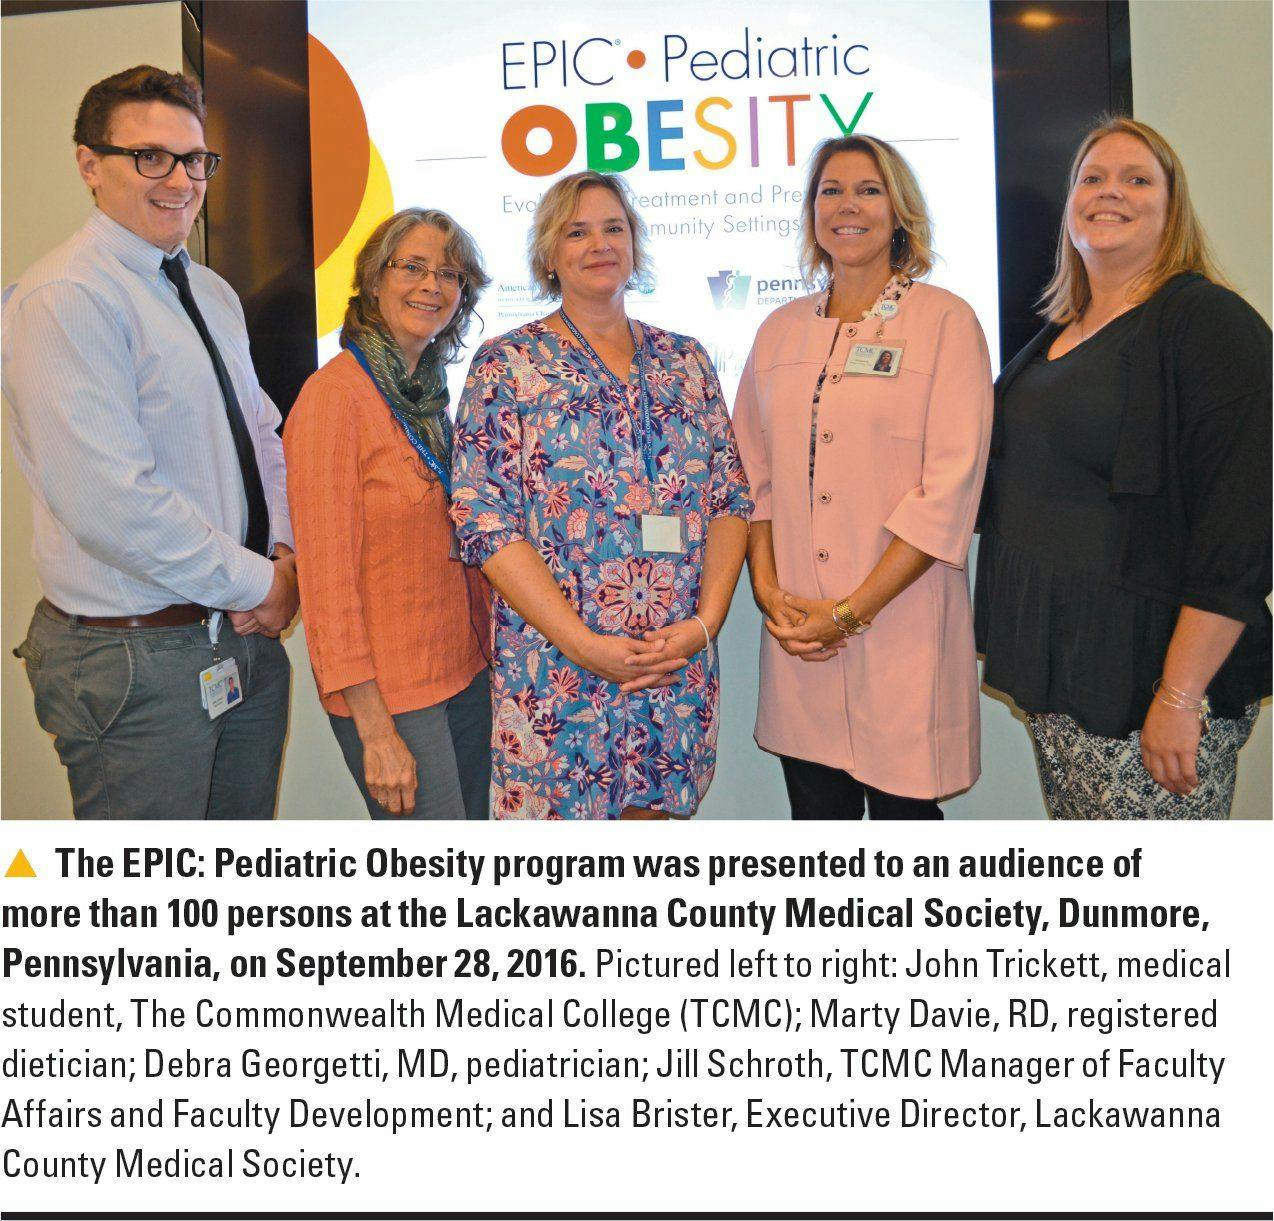 EPIC Pediatric Obesity program presents at Lackawanna Count Medical Society